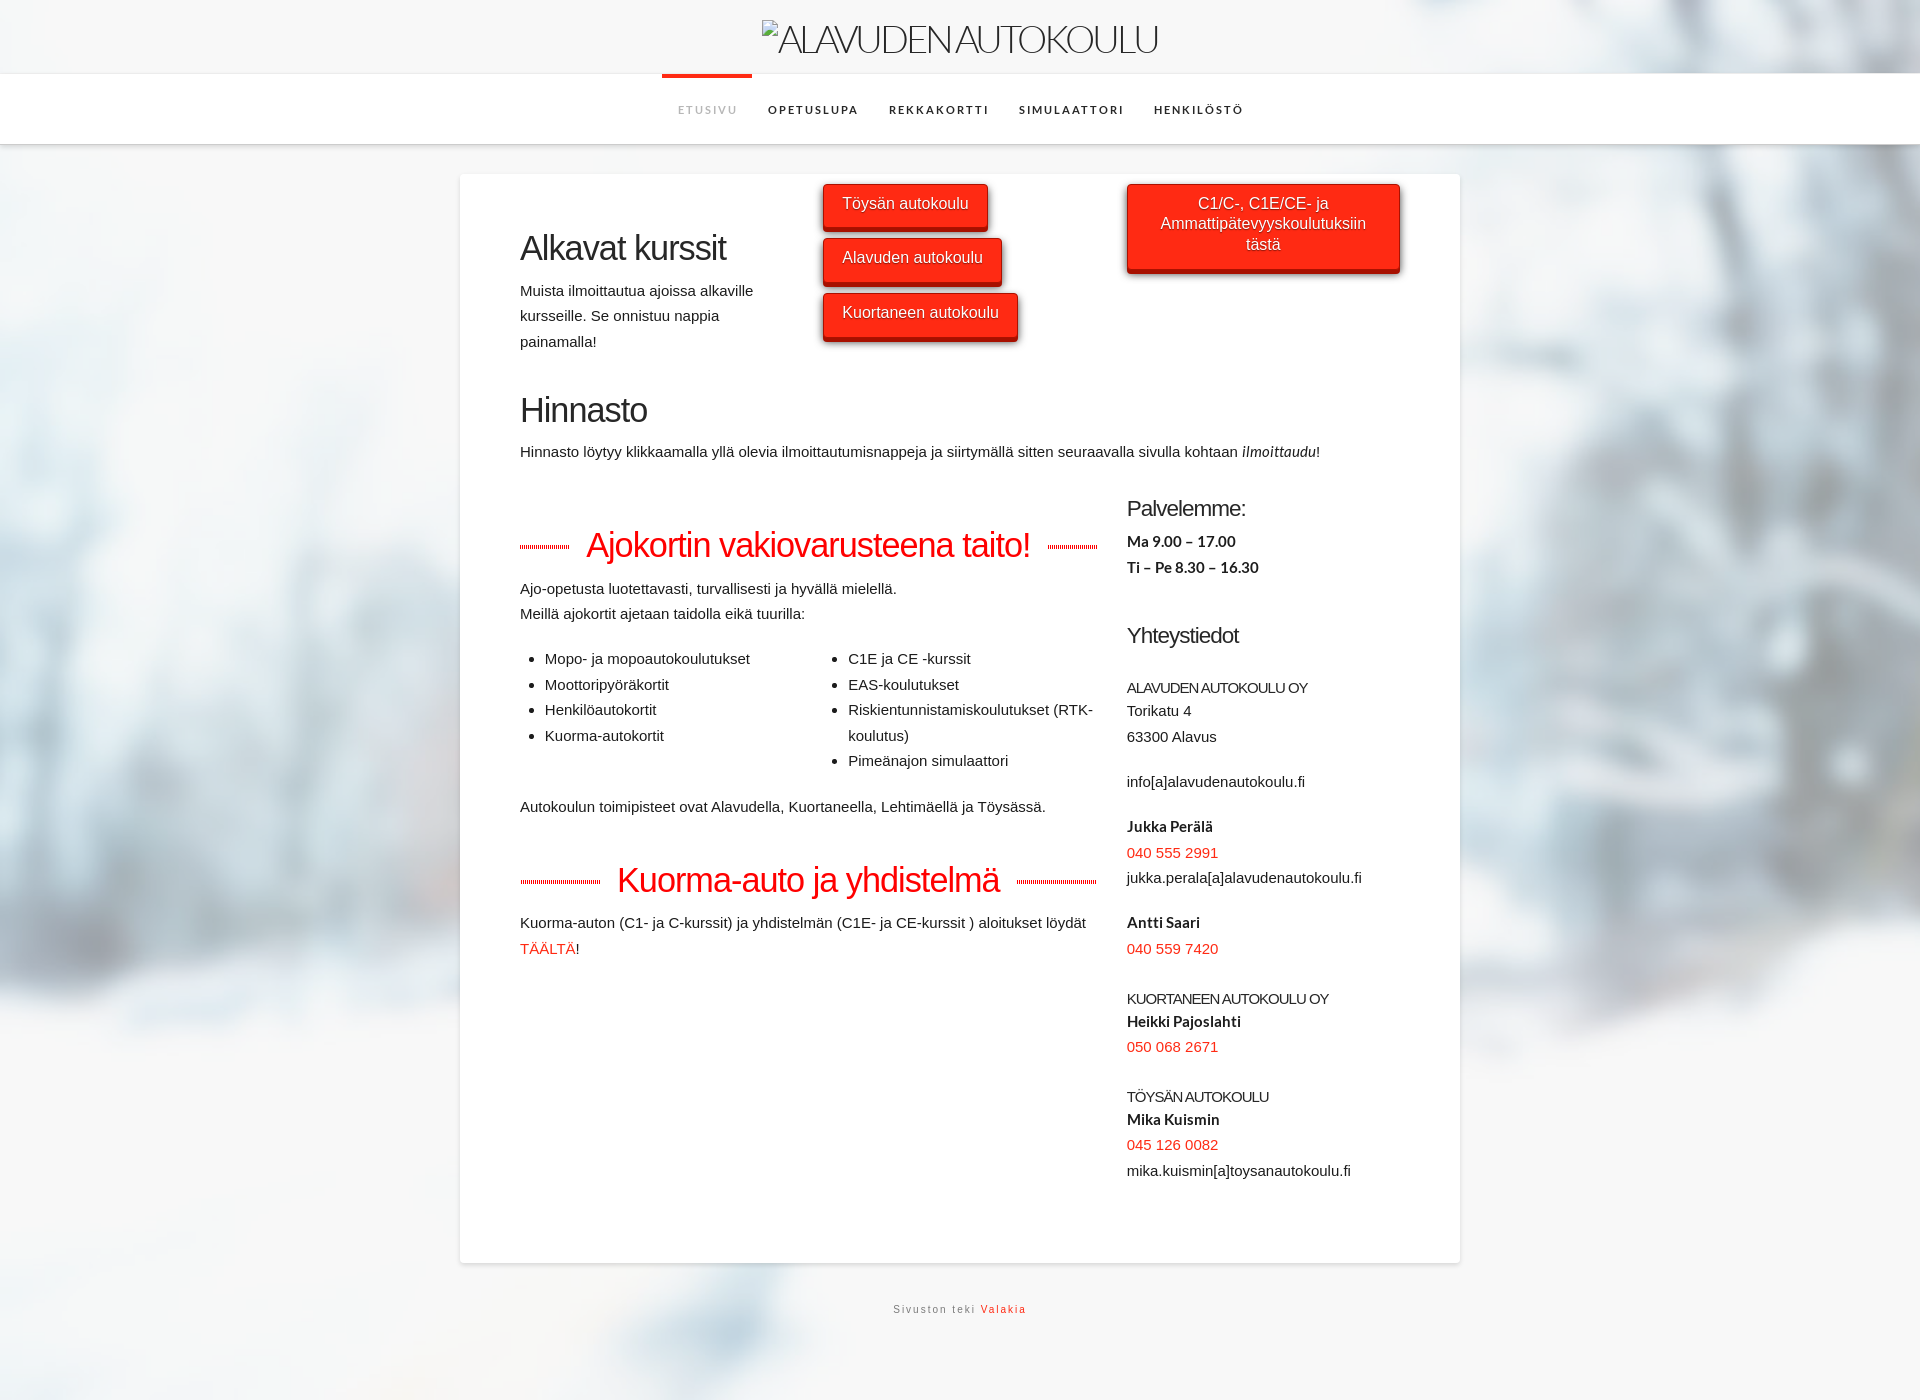 Skärmdump för toysanautokoulu.fi